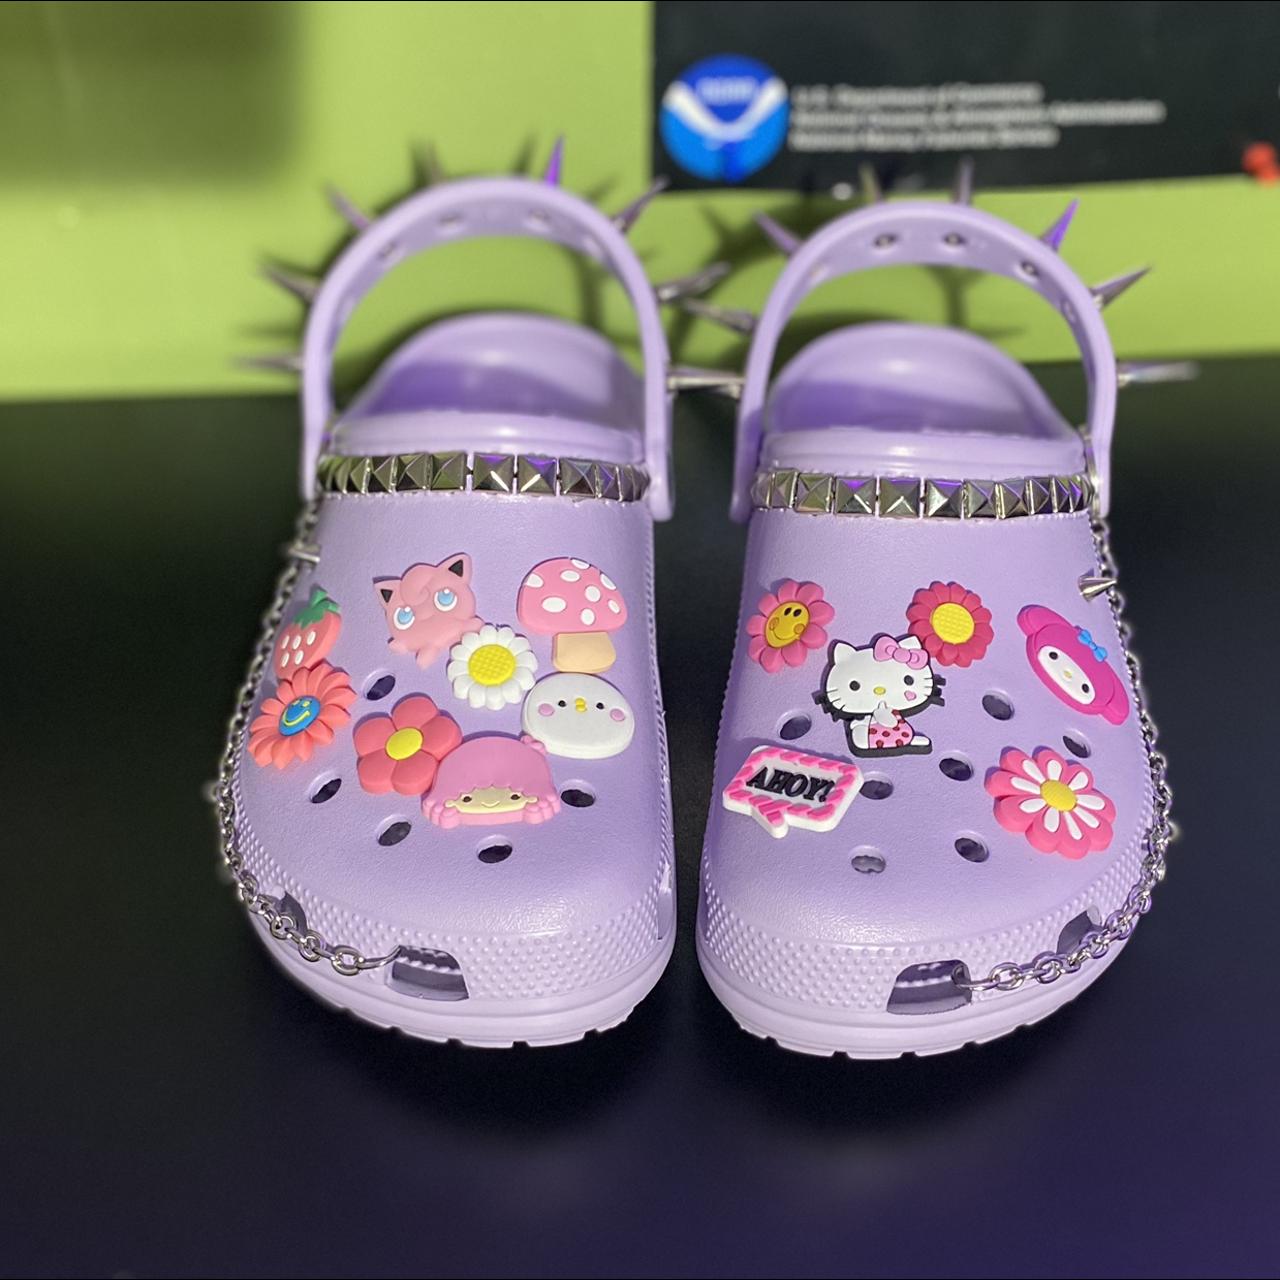 Spiked crocs of my dreams 🖤 #spikedcrocs #platformcrocs #crocs #emocr